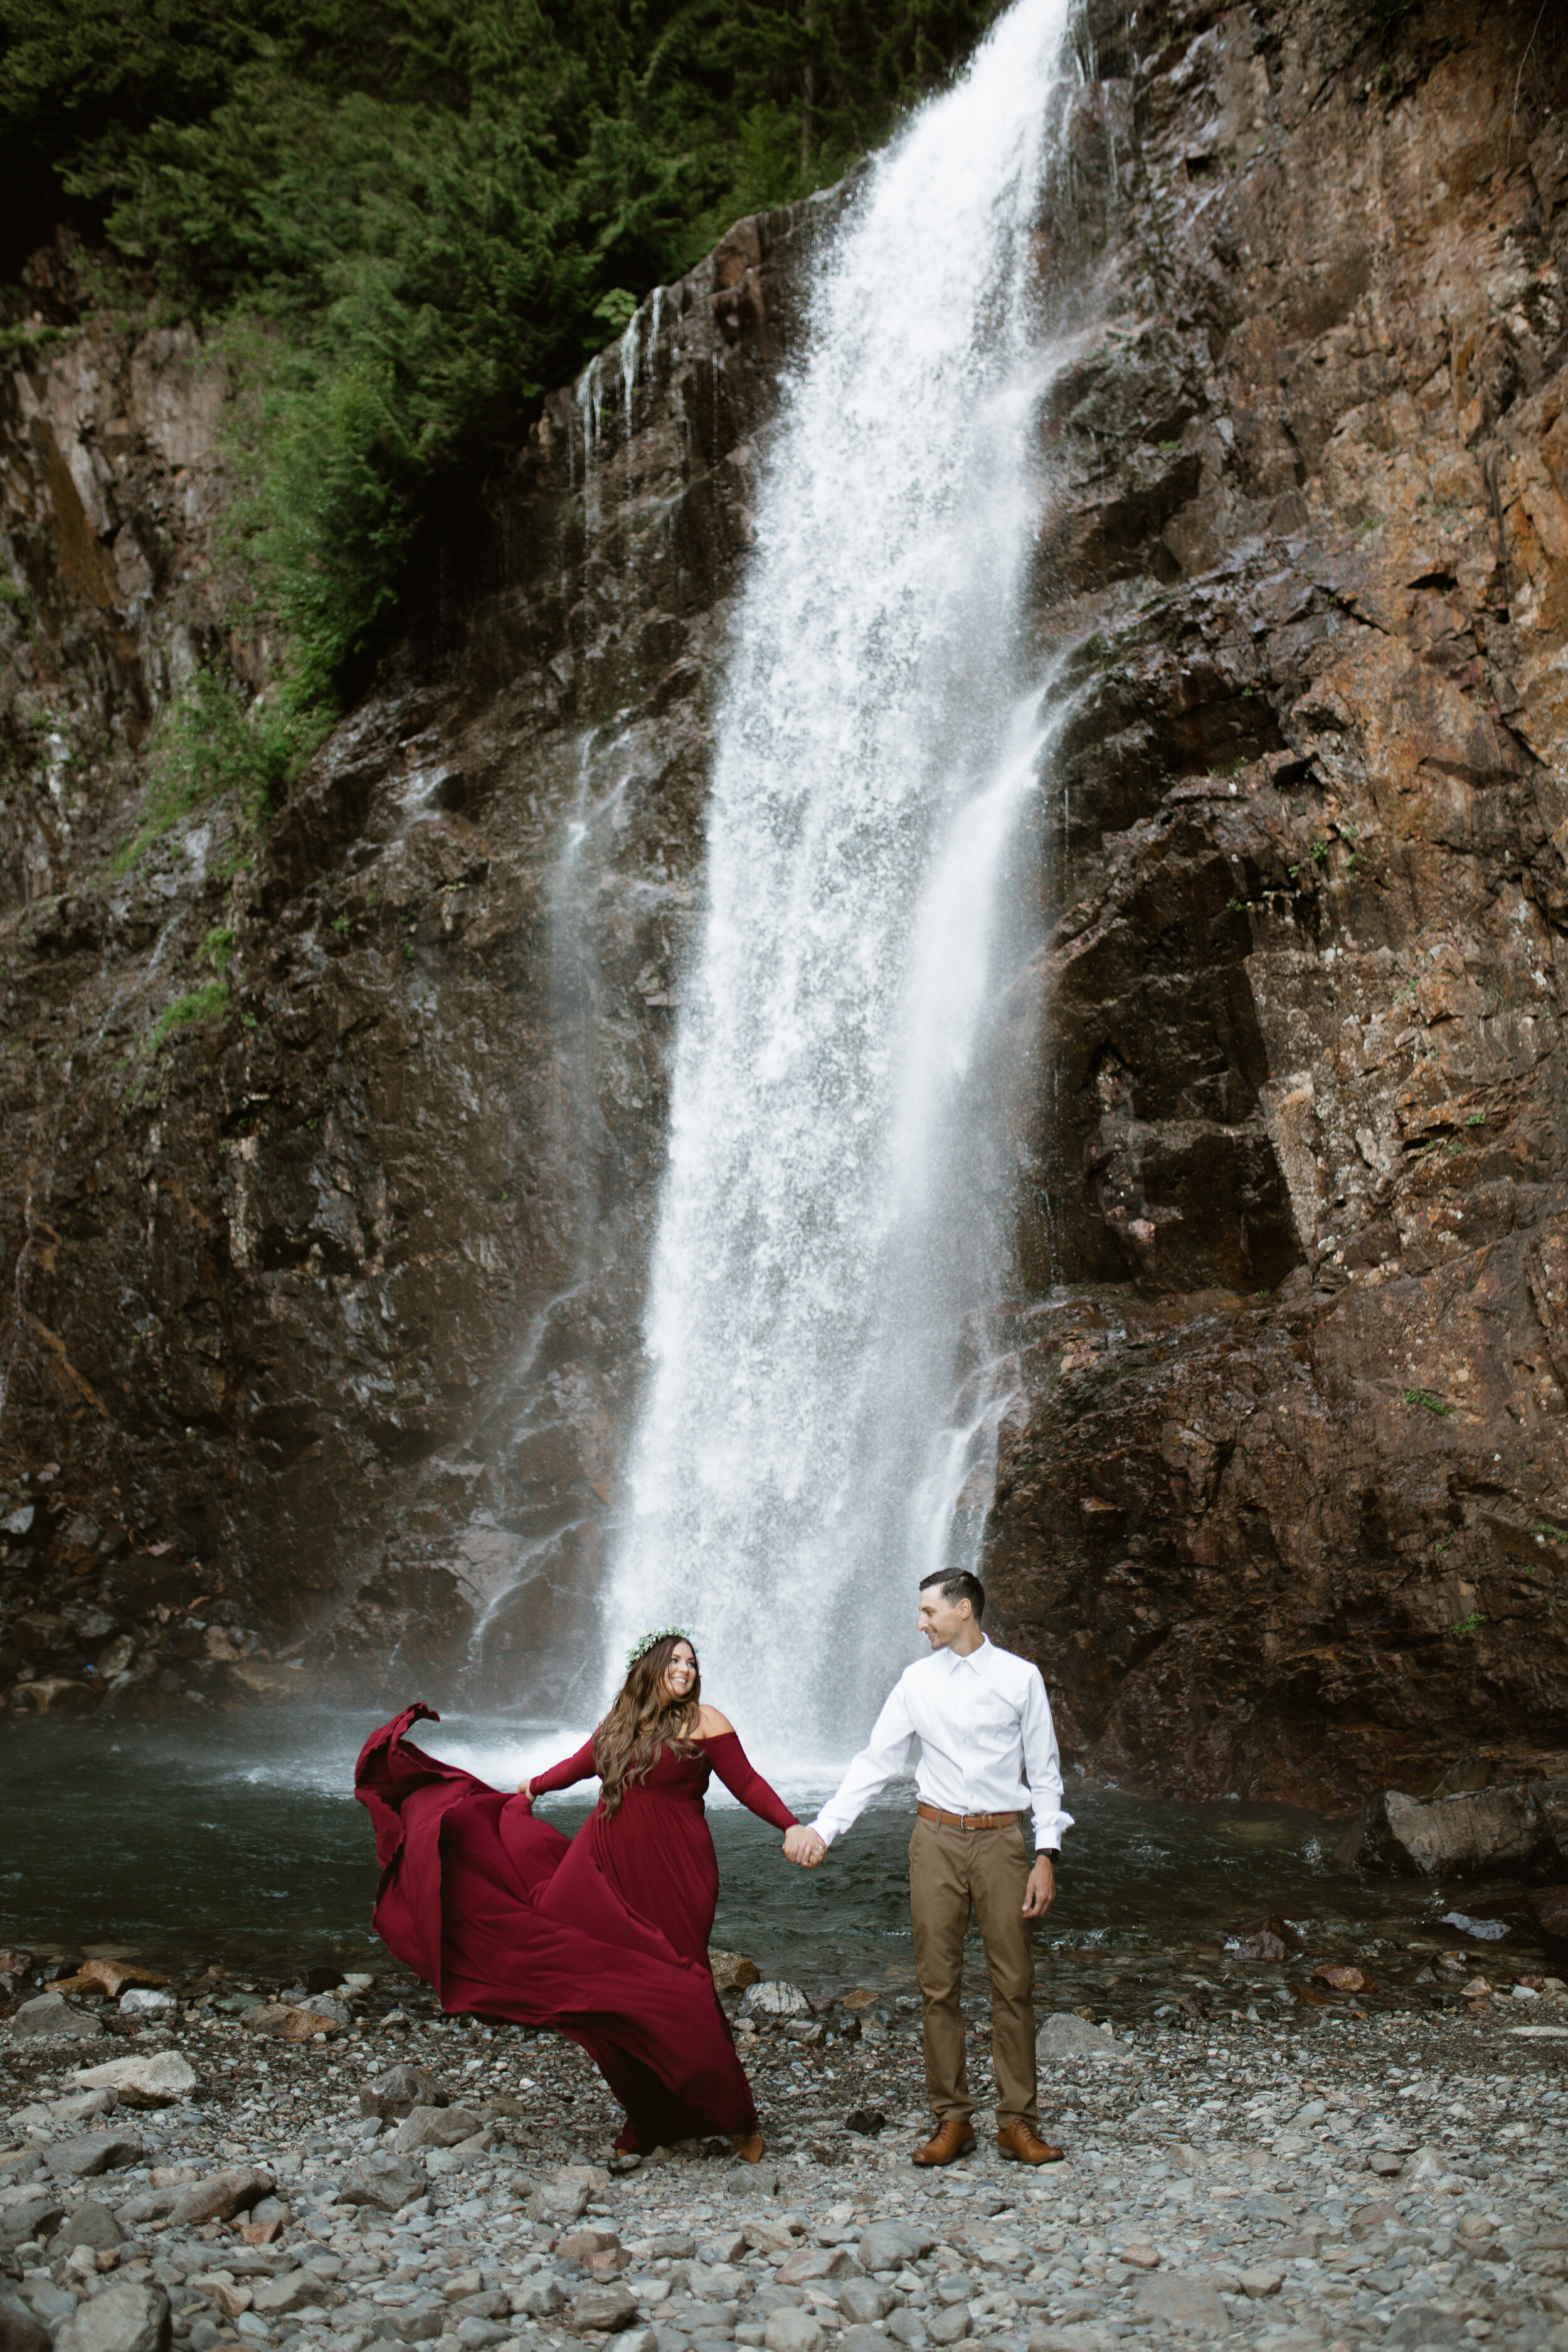 nicole-daacke-photography-gold-creek-pond-franklin-falls-waterfall-summer-adventure-engagement-session-elopement-photographer-washington-summer-engagement-photos-snoqualmie-pass-106.jpg